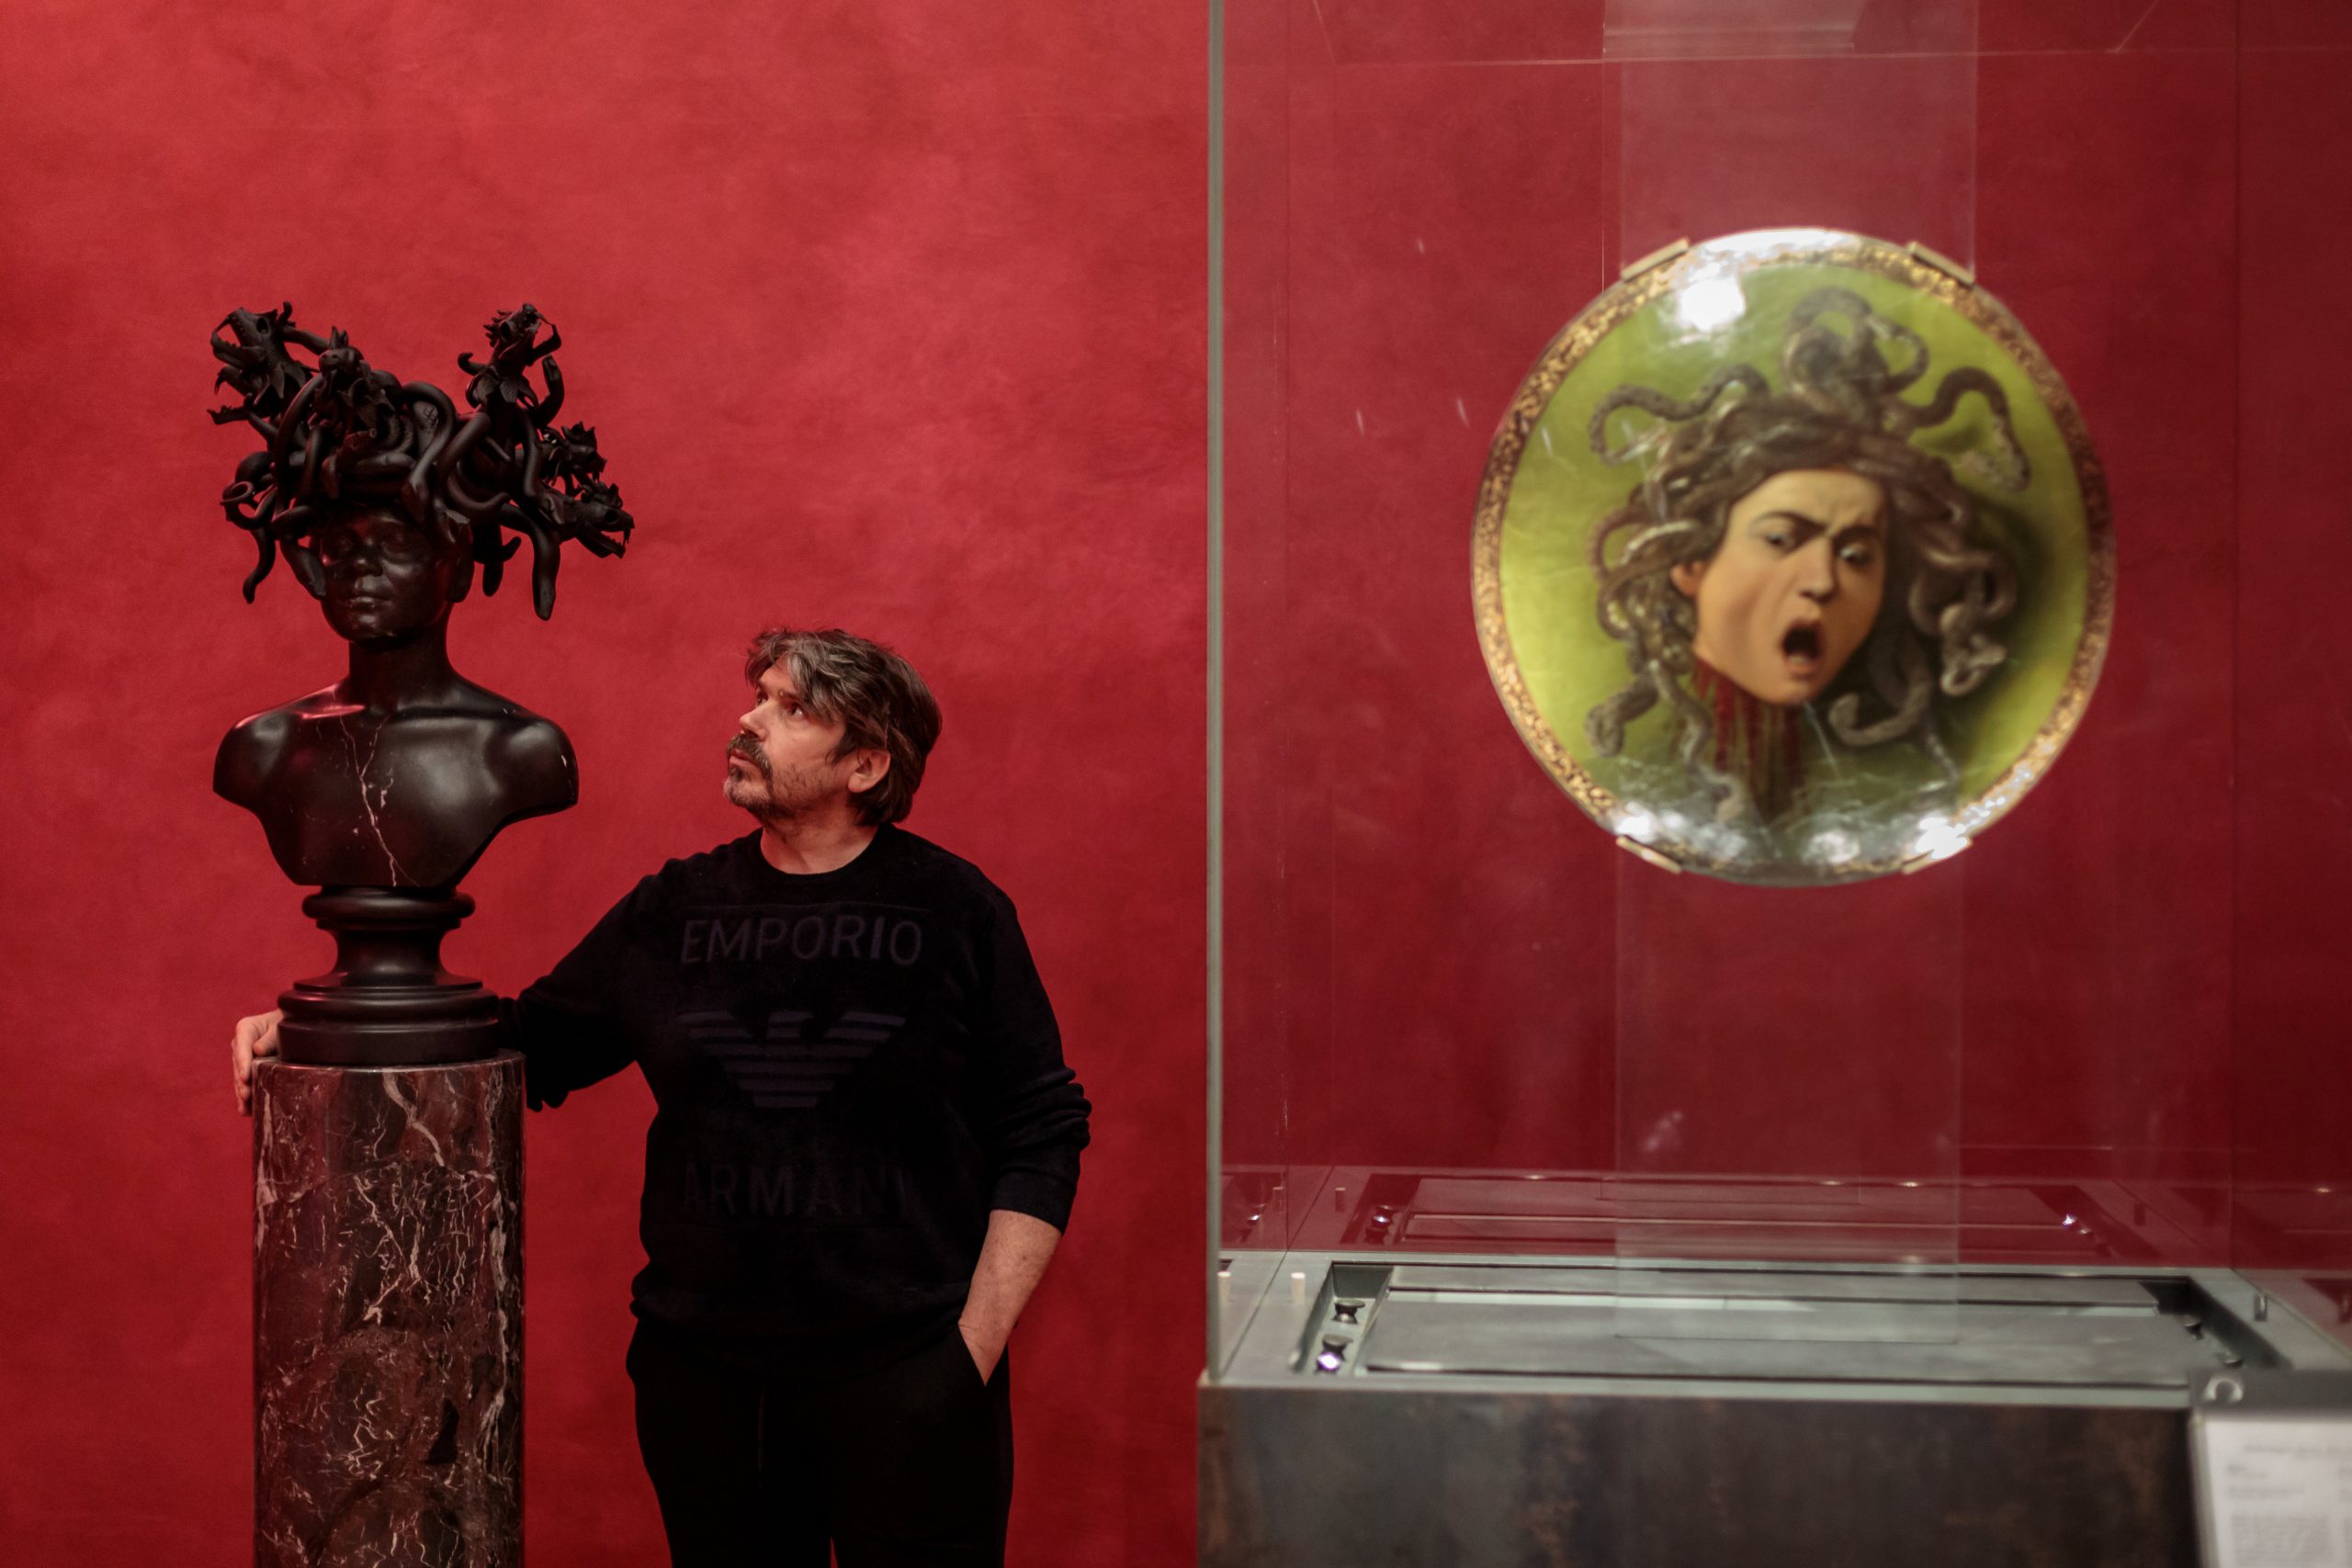 Koen Vanmechelen installing his artworks at the exhibition Seduzione, Gallerie degli Uffizi